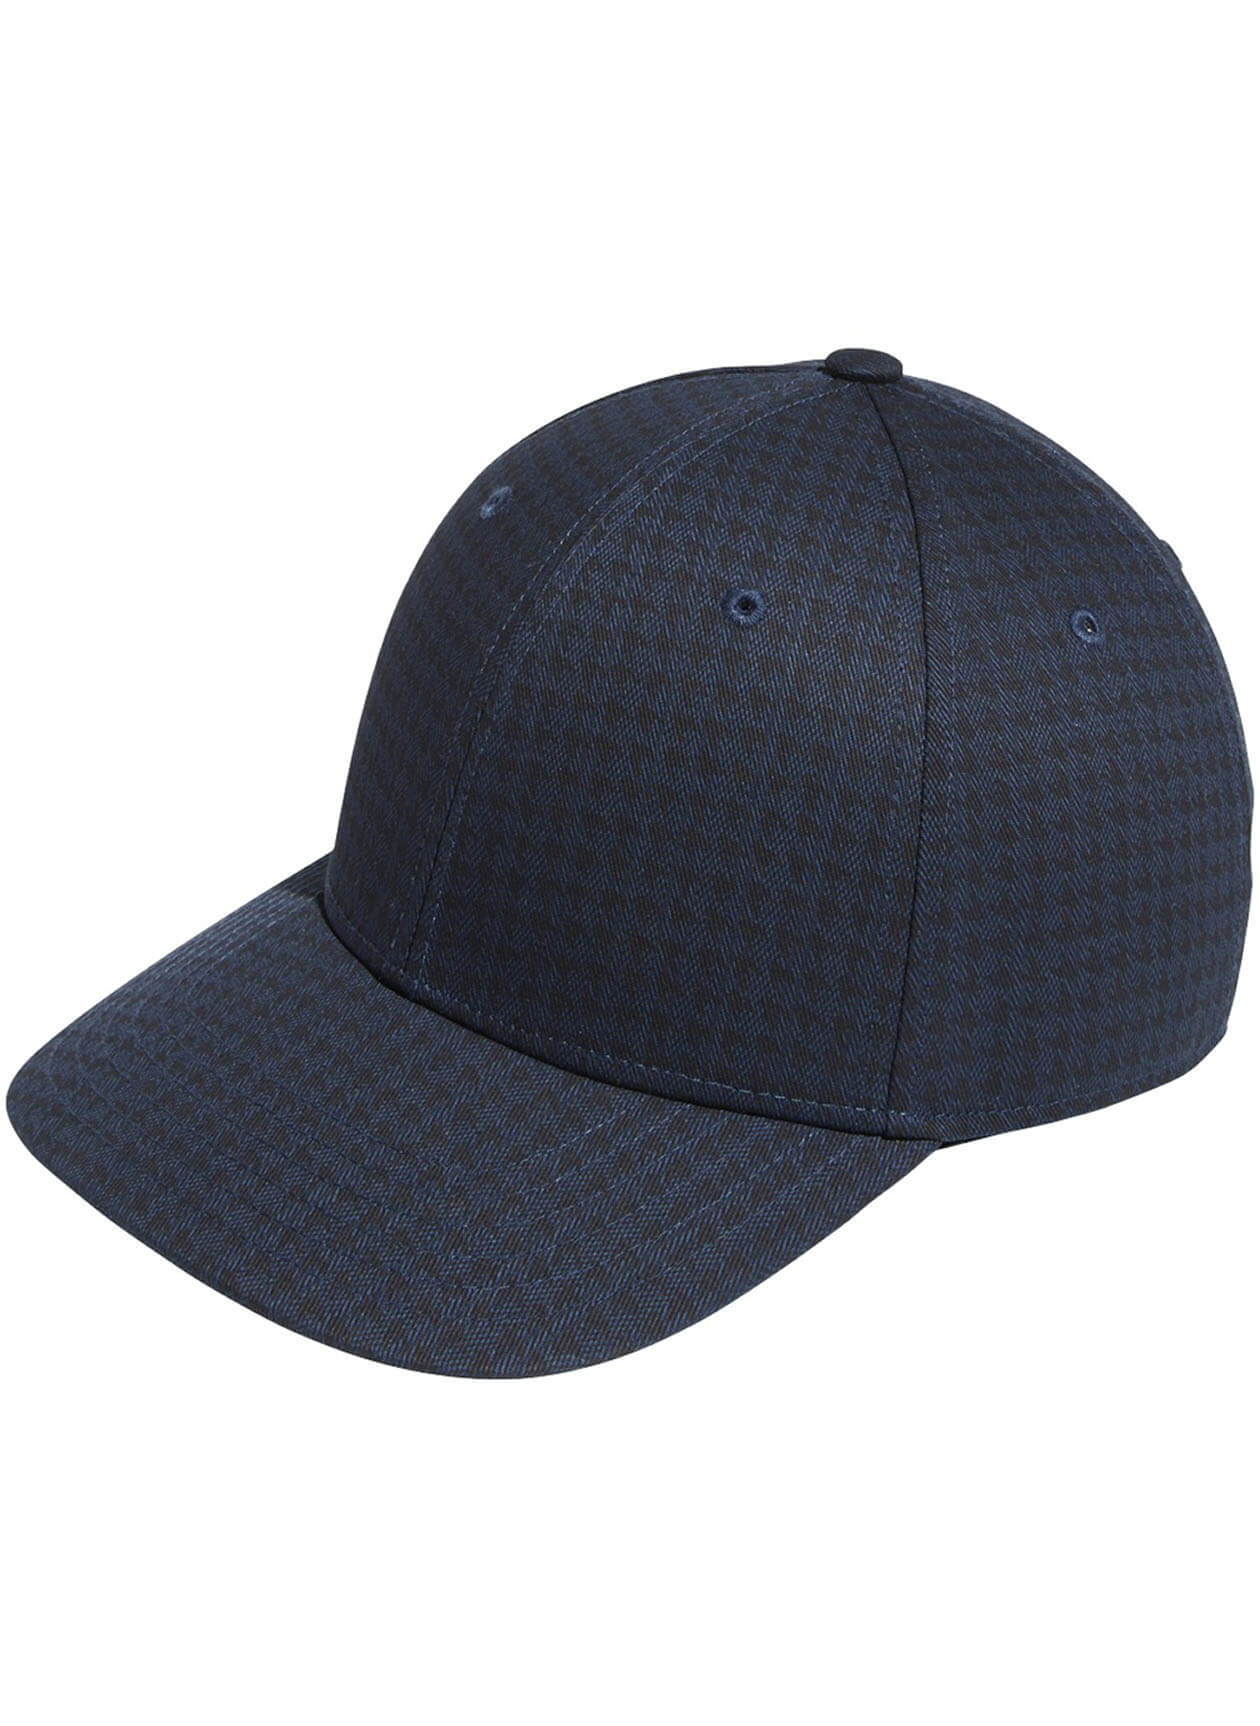 Adidas AD312 - Golf Members Bounce Hat